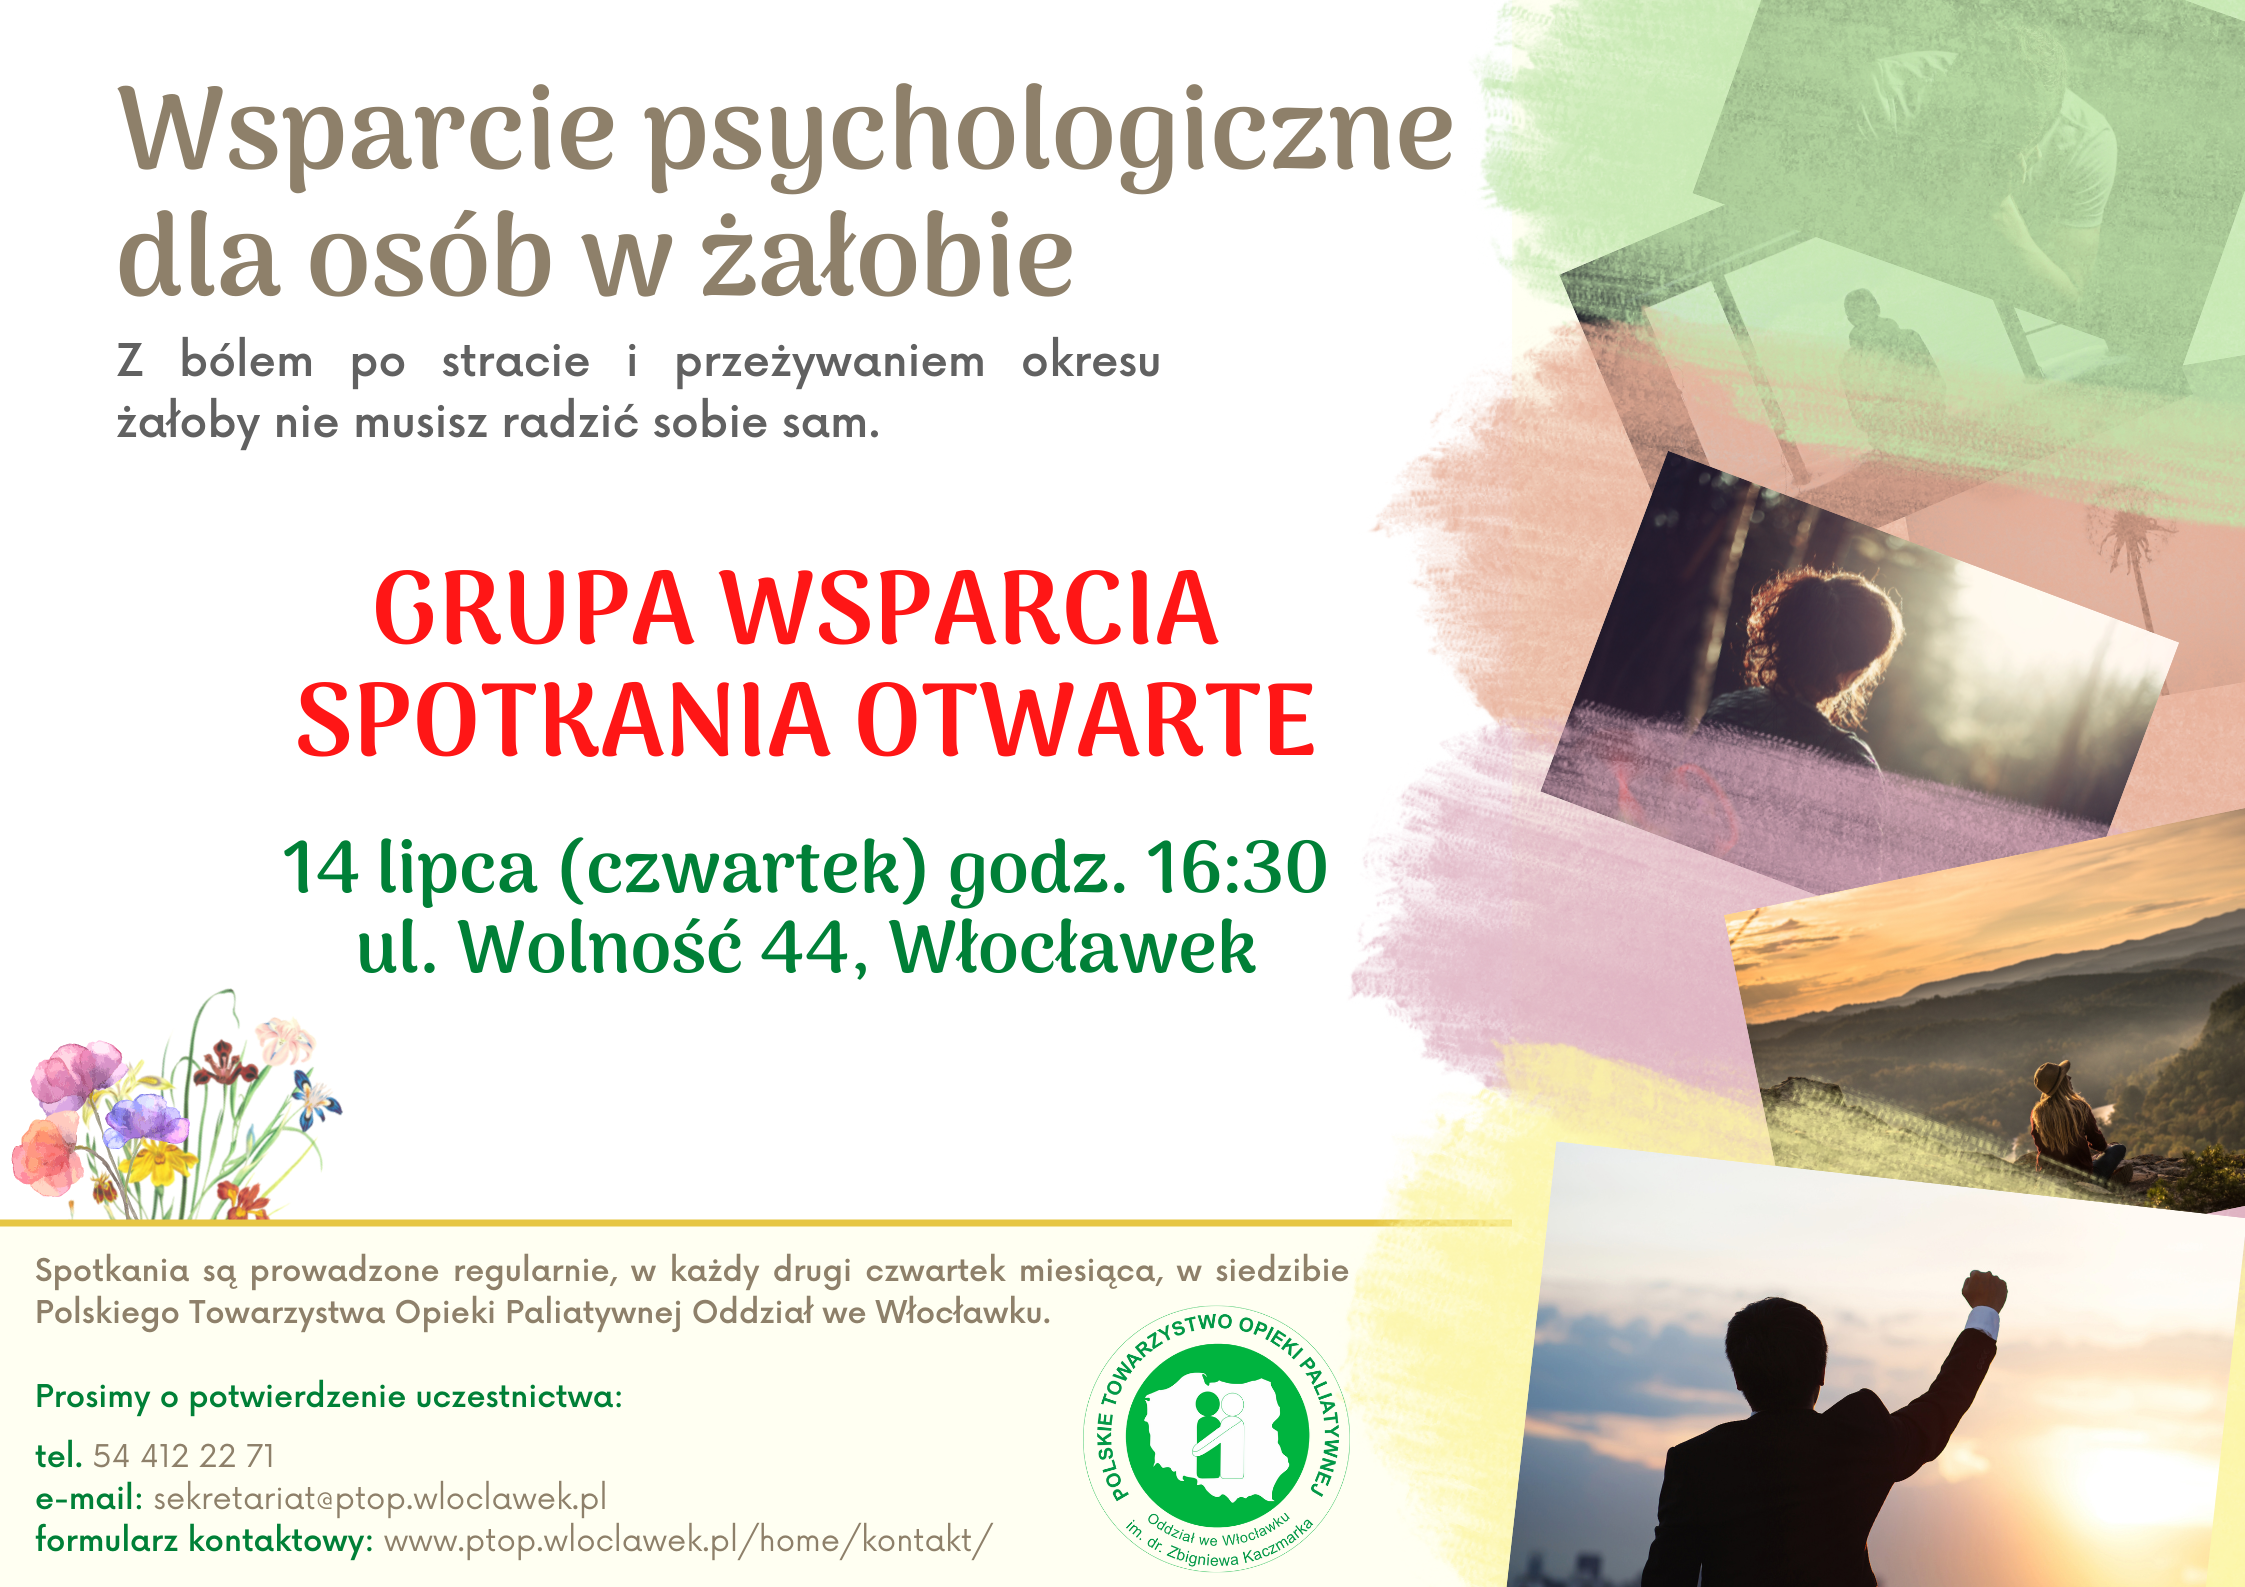 You are currently viewing Wsparcie psychologiczne – spotkanie 14 lipca 2022 r.